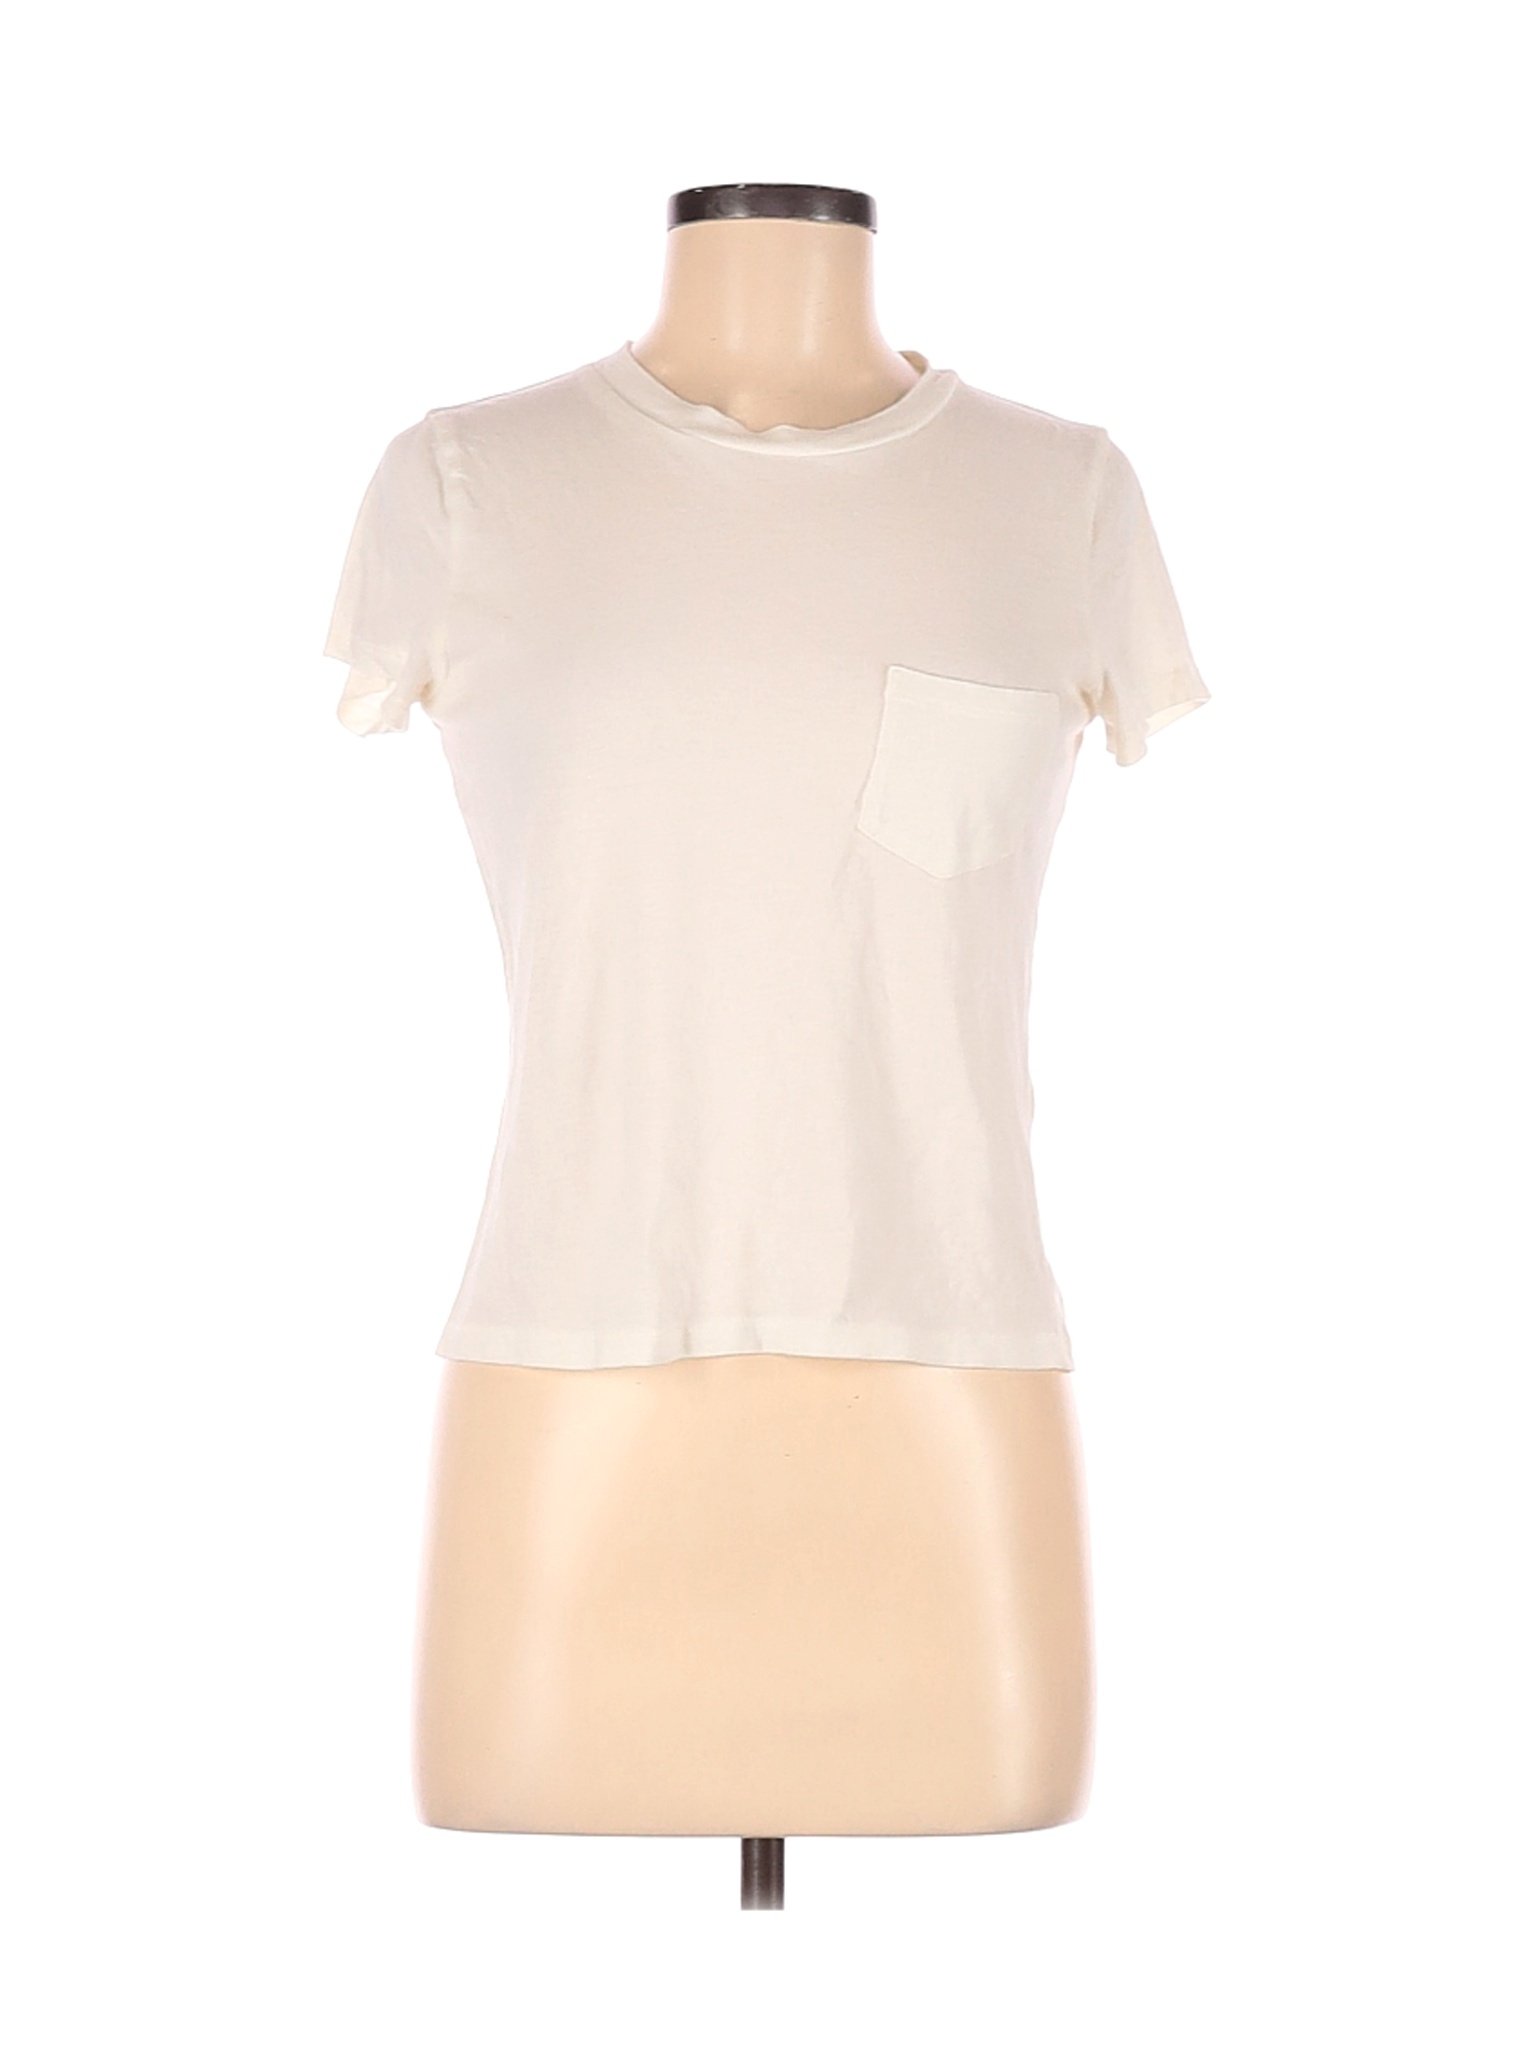 Madewell Women Ivory Short Sleeve T-Shirt XS | eBay